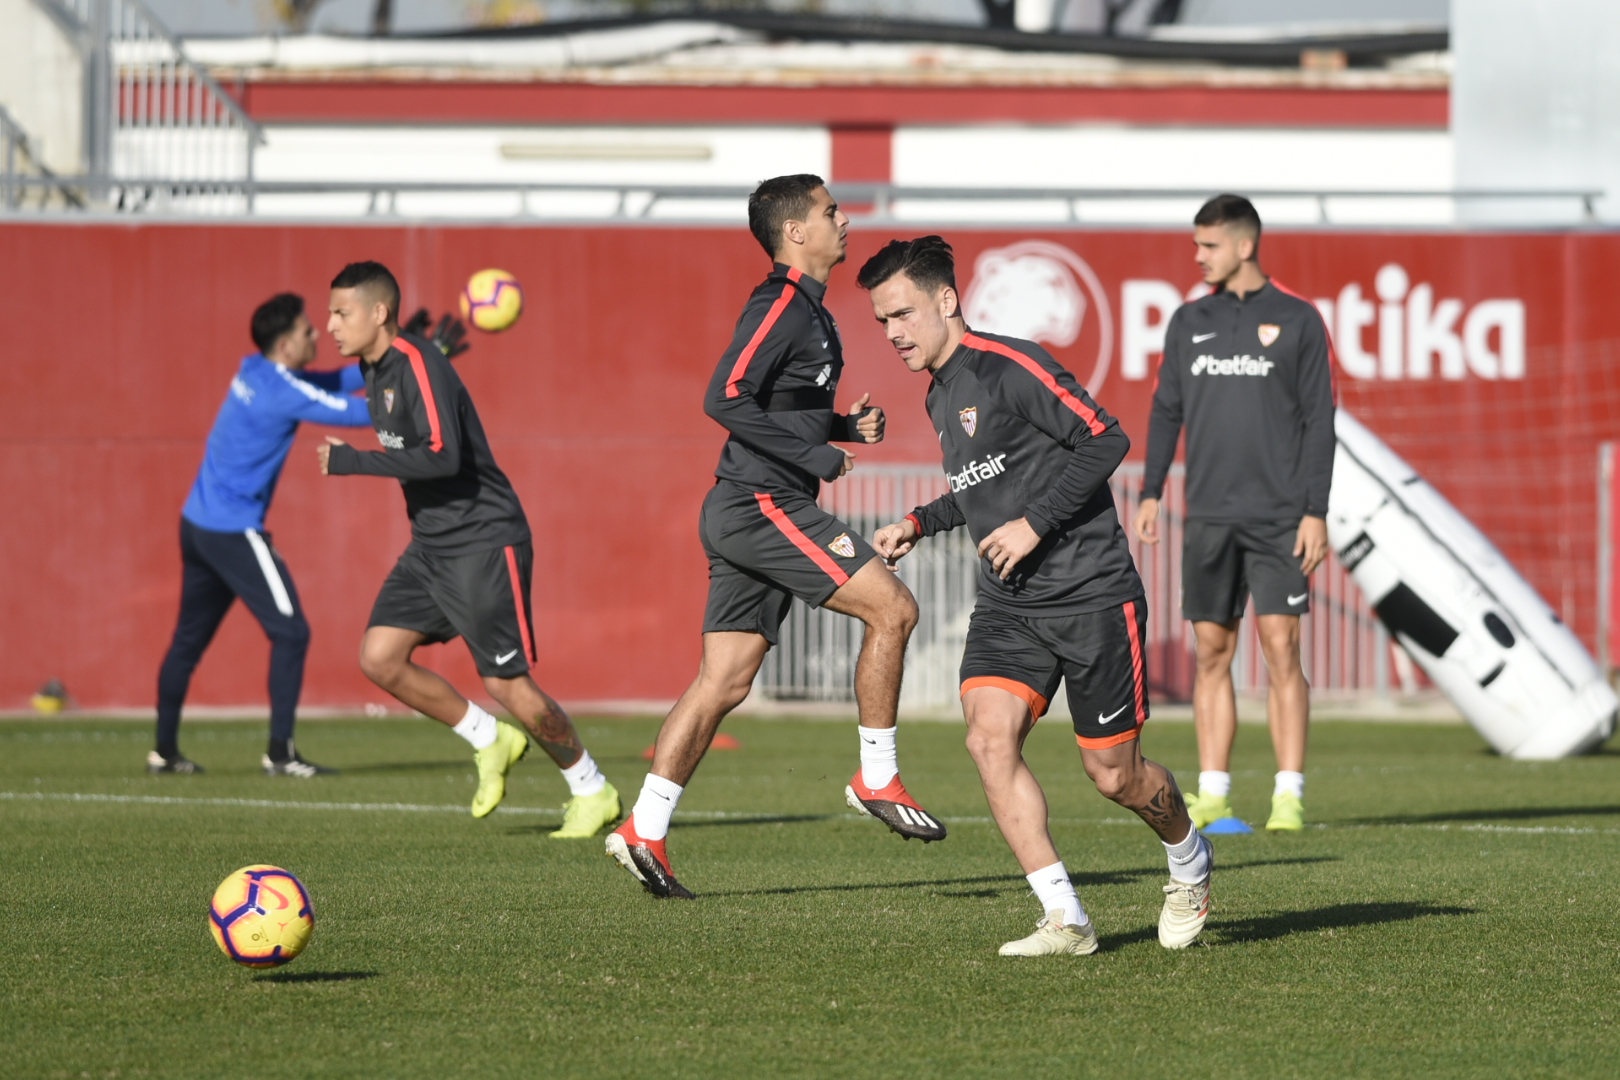 Roque Mesa trains with Sevilla FC